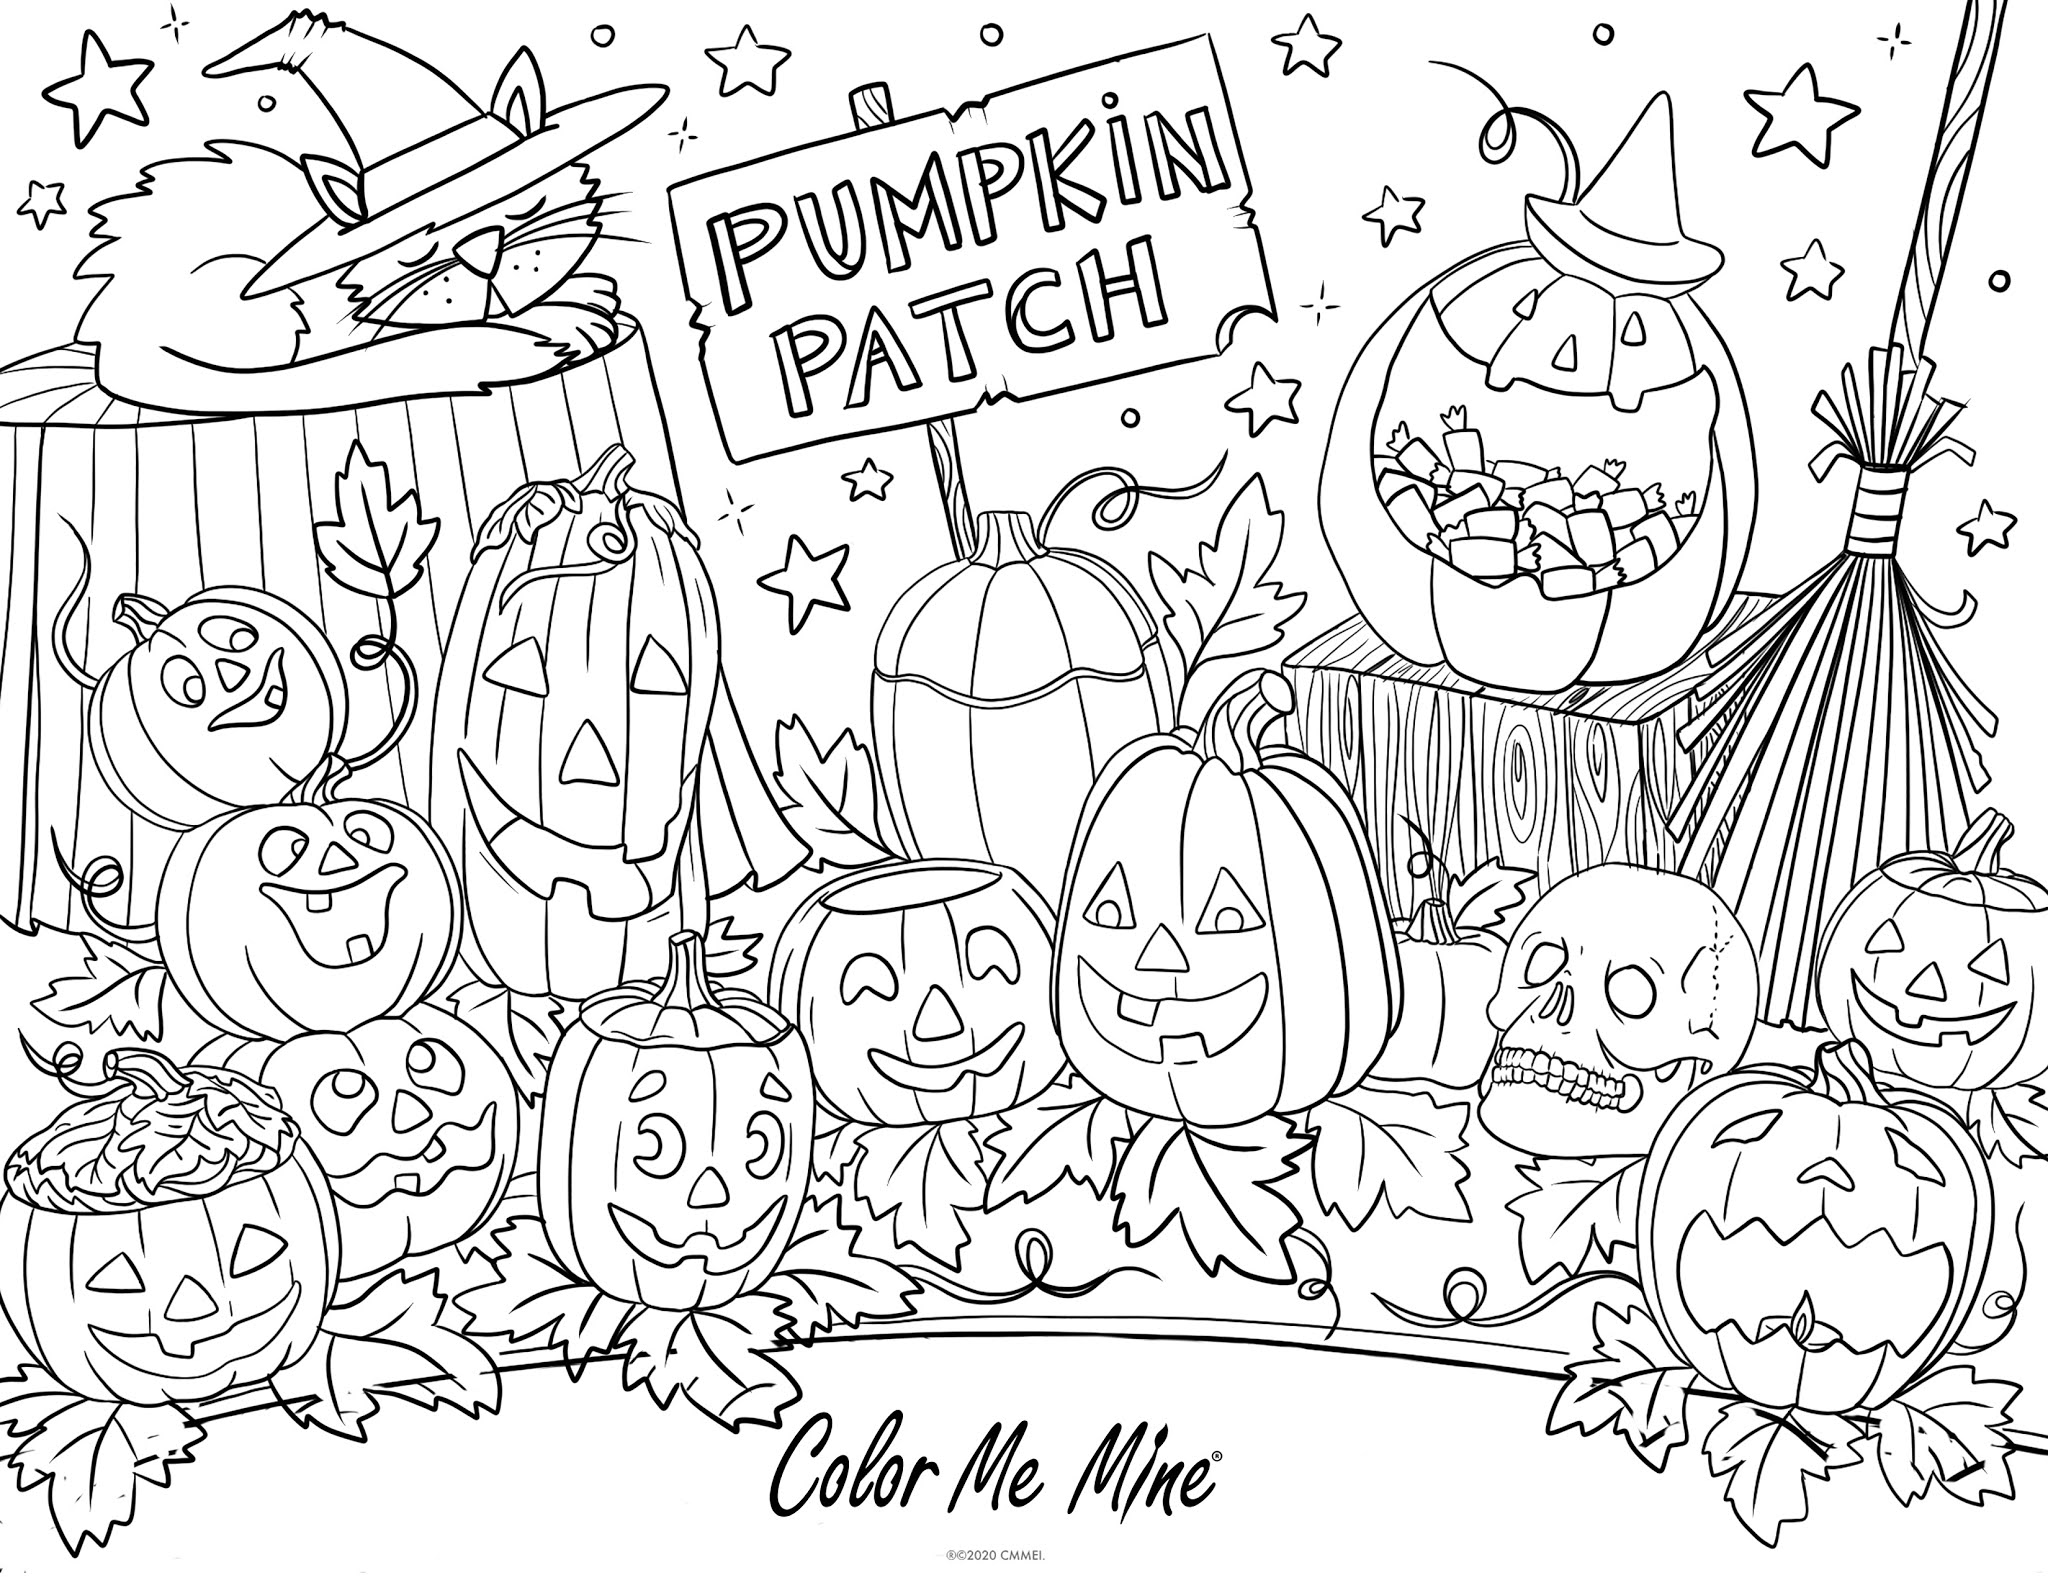 Pumpkin patch coloring sheet